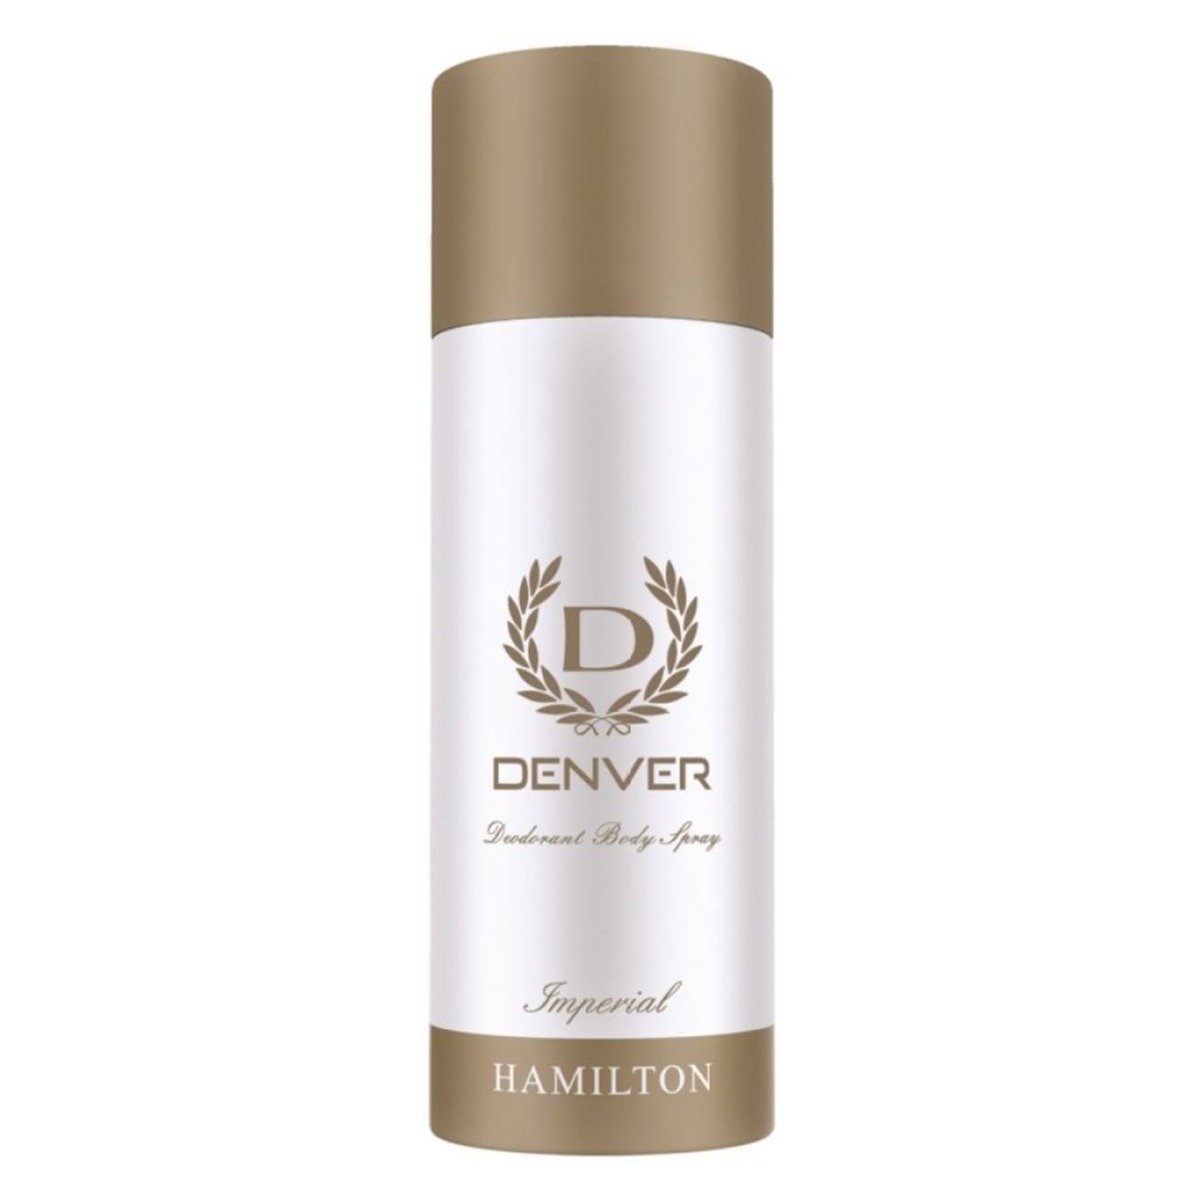 Denver Hamilton Imperial Deodorant Body Spray, 165ml